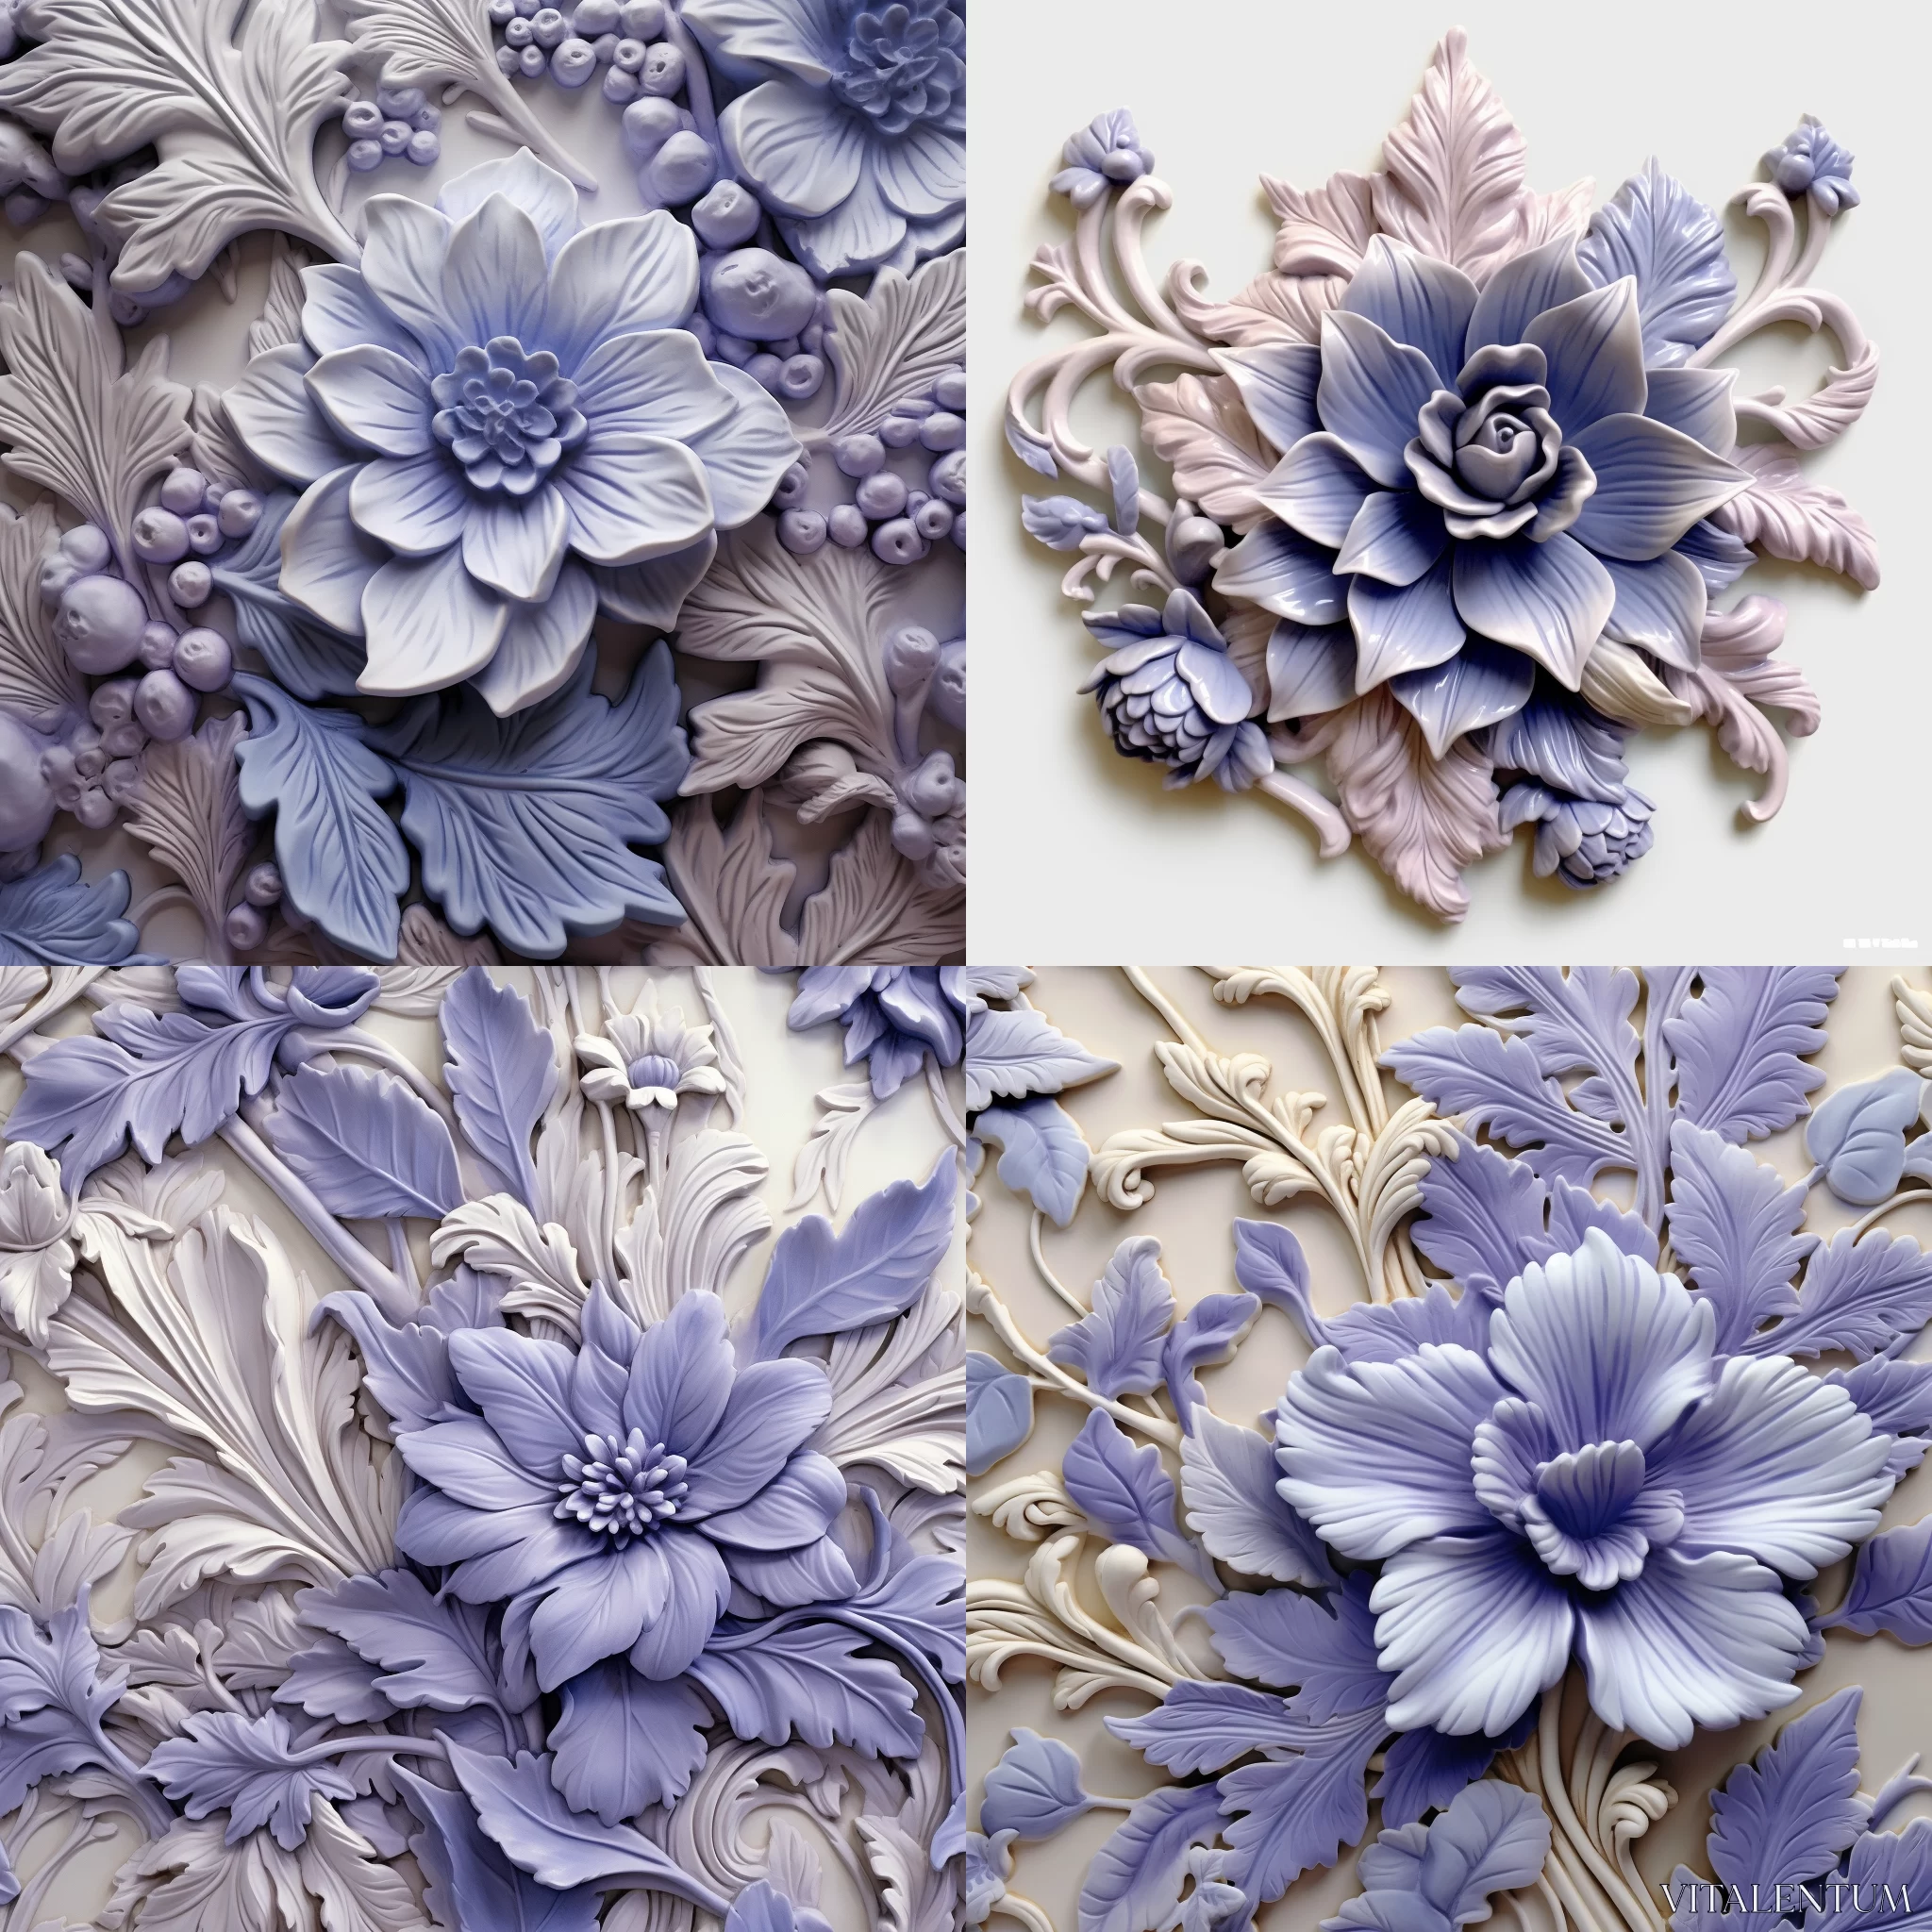 PROMPT Romanticized Nature: Rococo Style Ceramic Floral Design